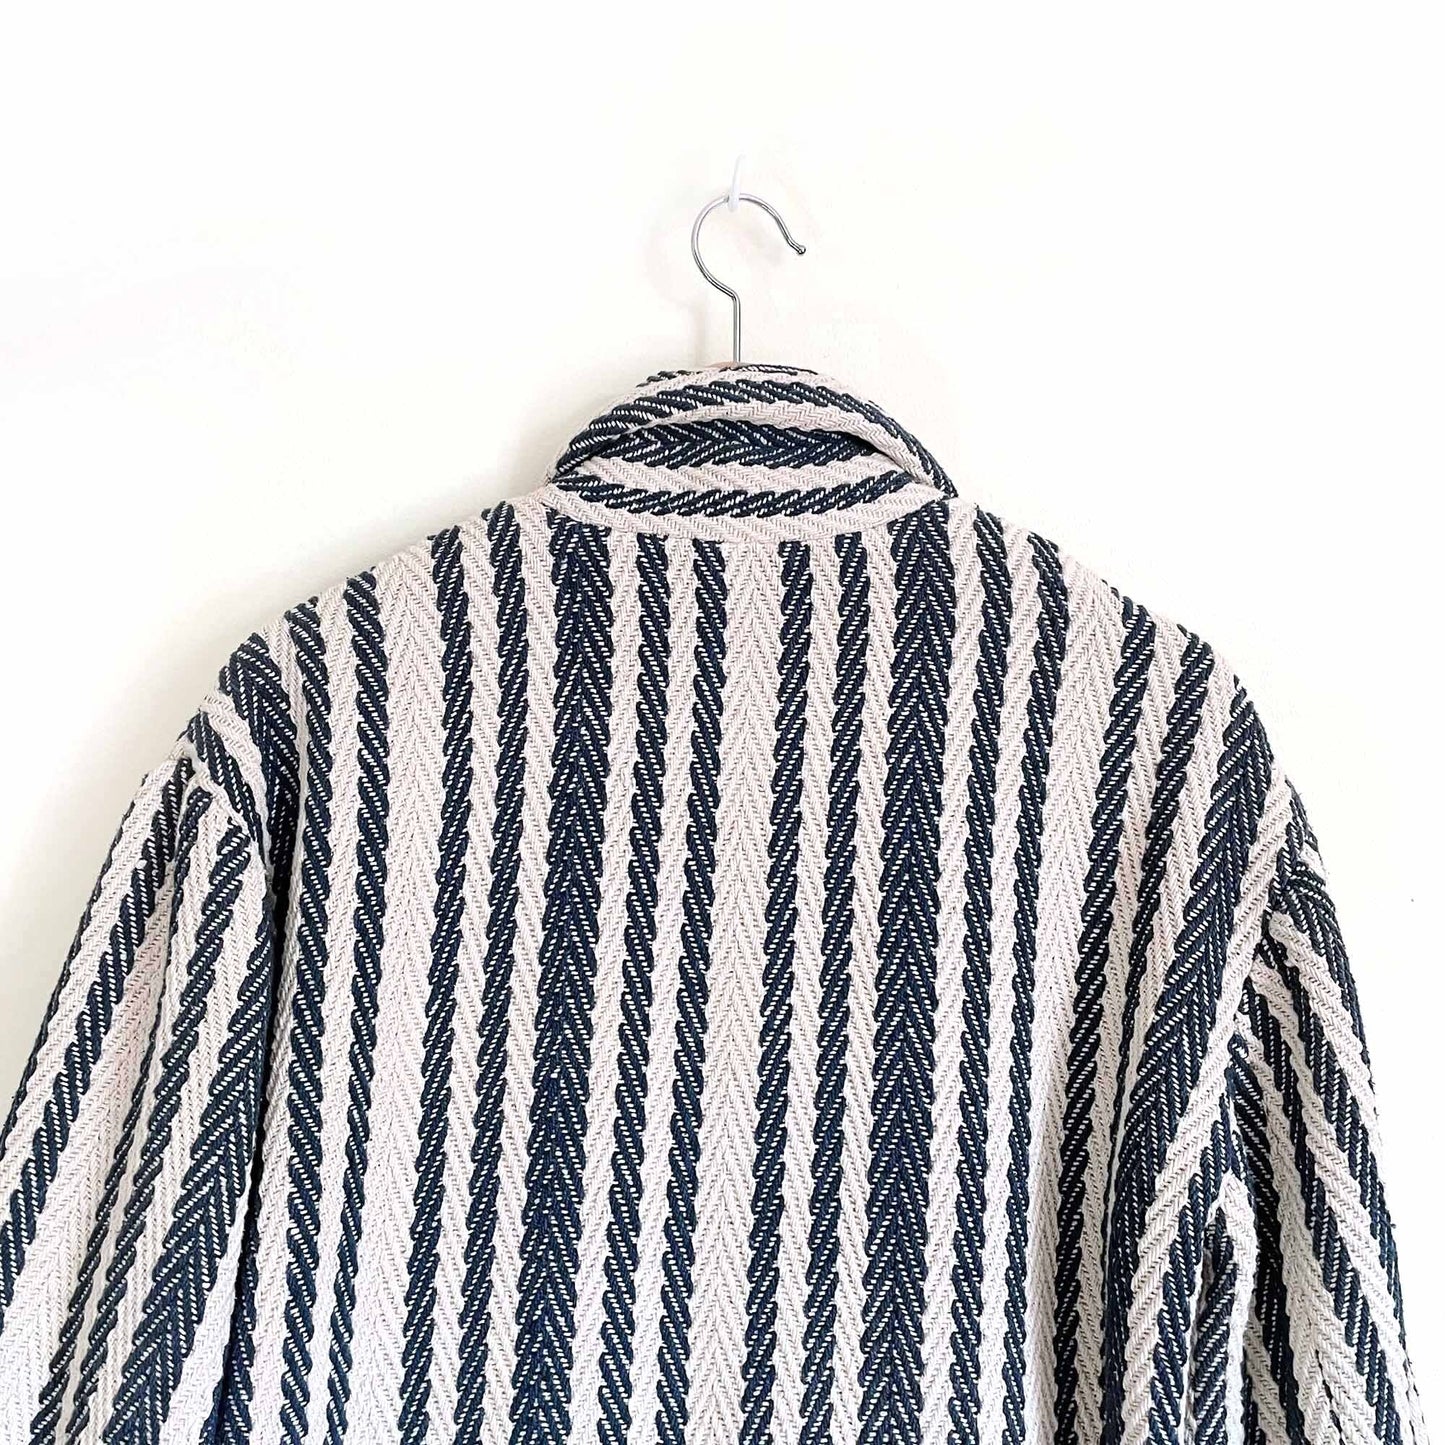 IRO brodnay oversized striped herringbone jacket - size 36